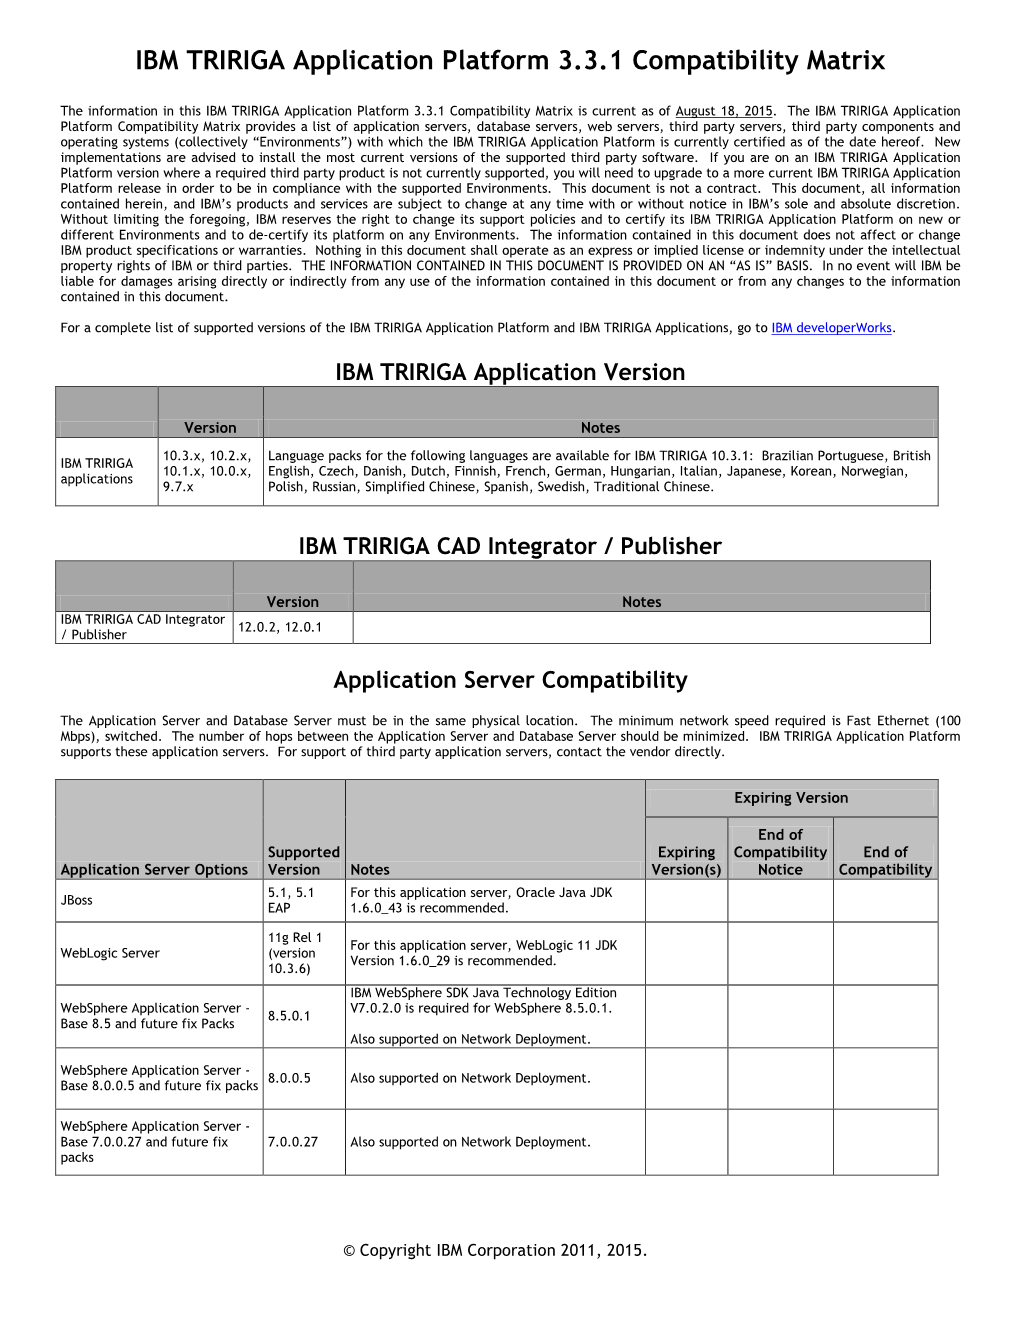 IBM TRIRIGA Application Platform Compatibility Matrix for 3.3.1